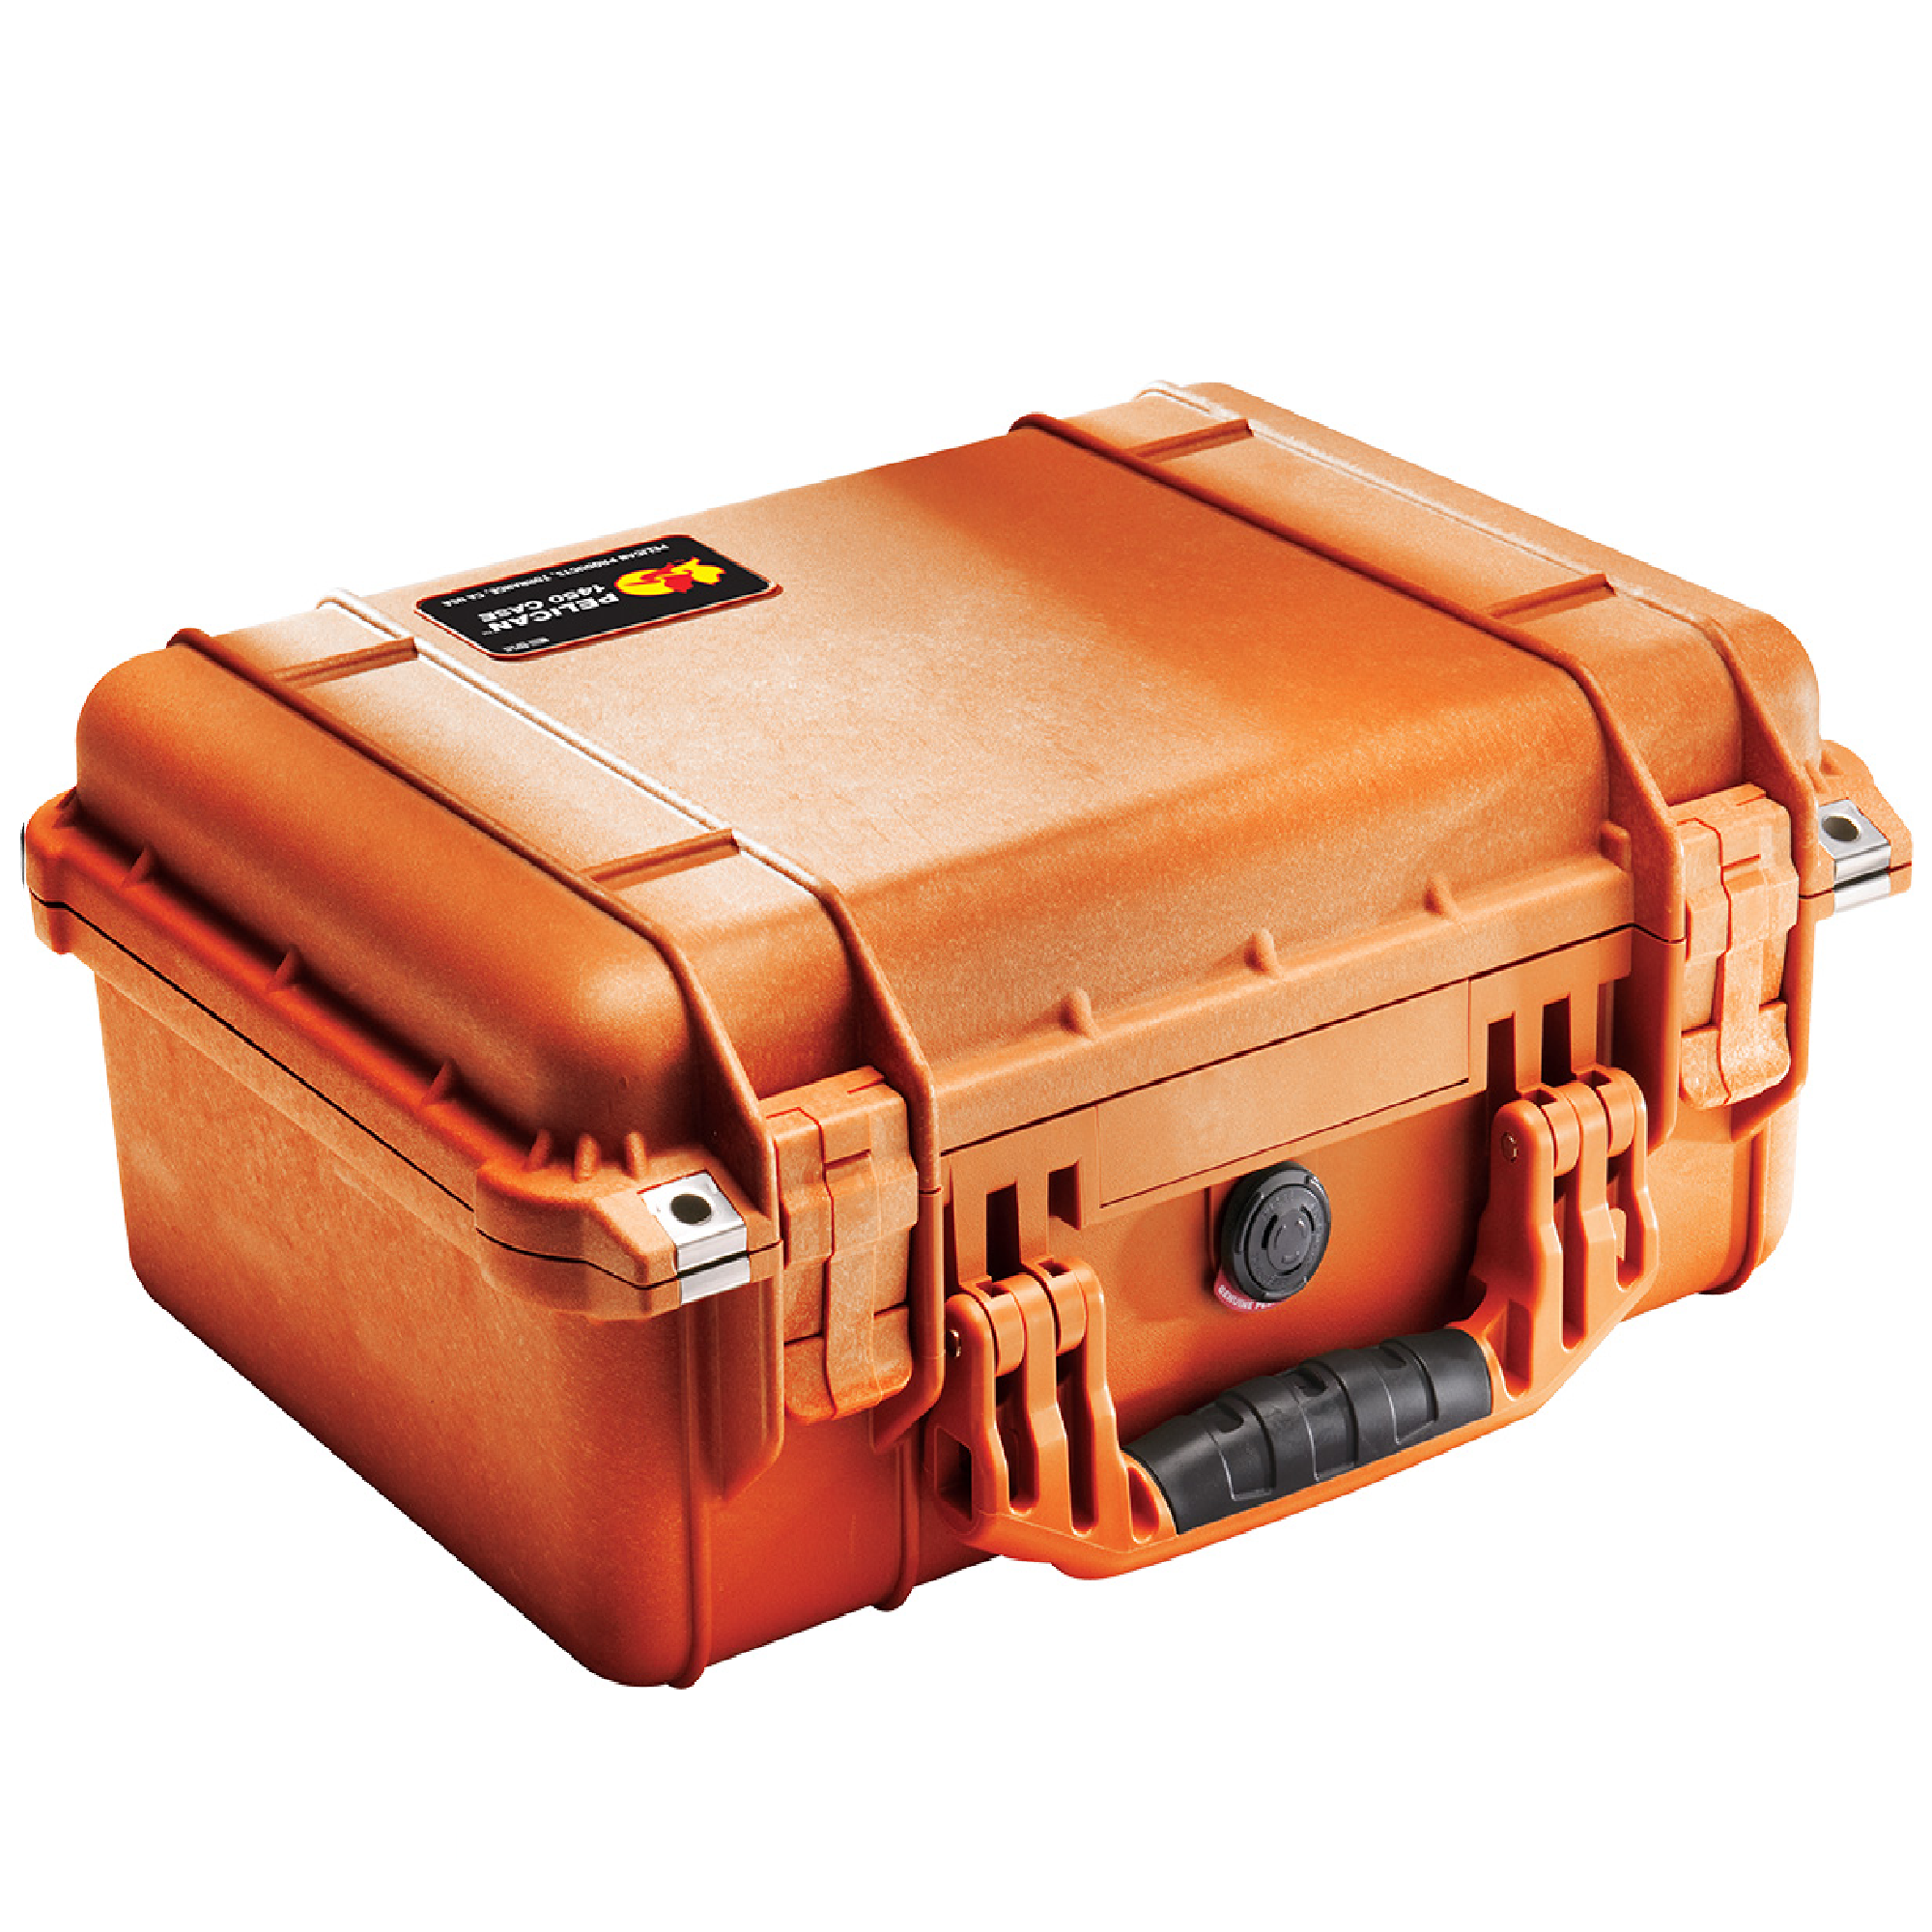 Pelican 1450 Protector Case Orange With Internal Foam